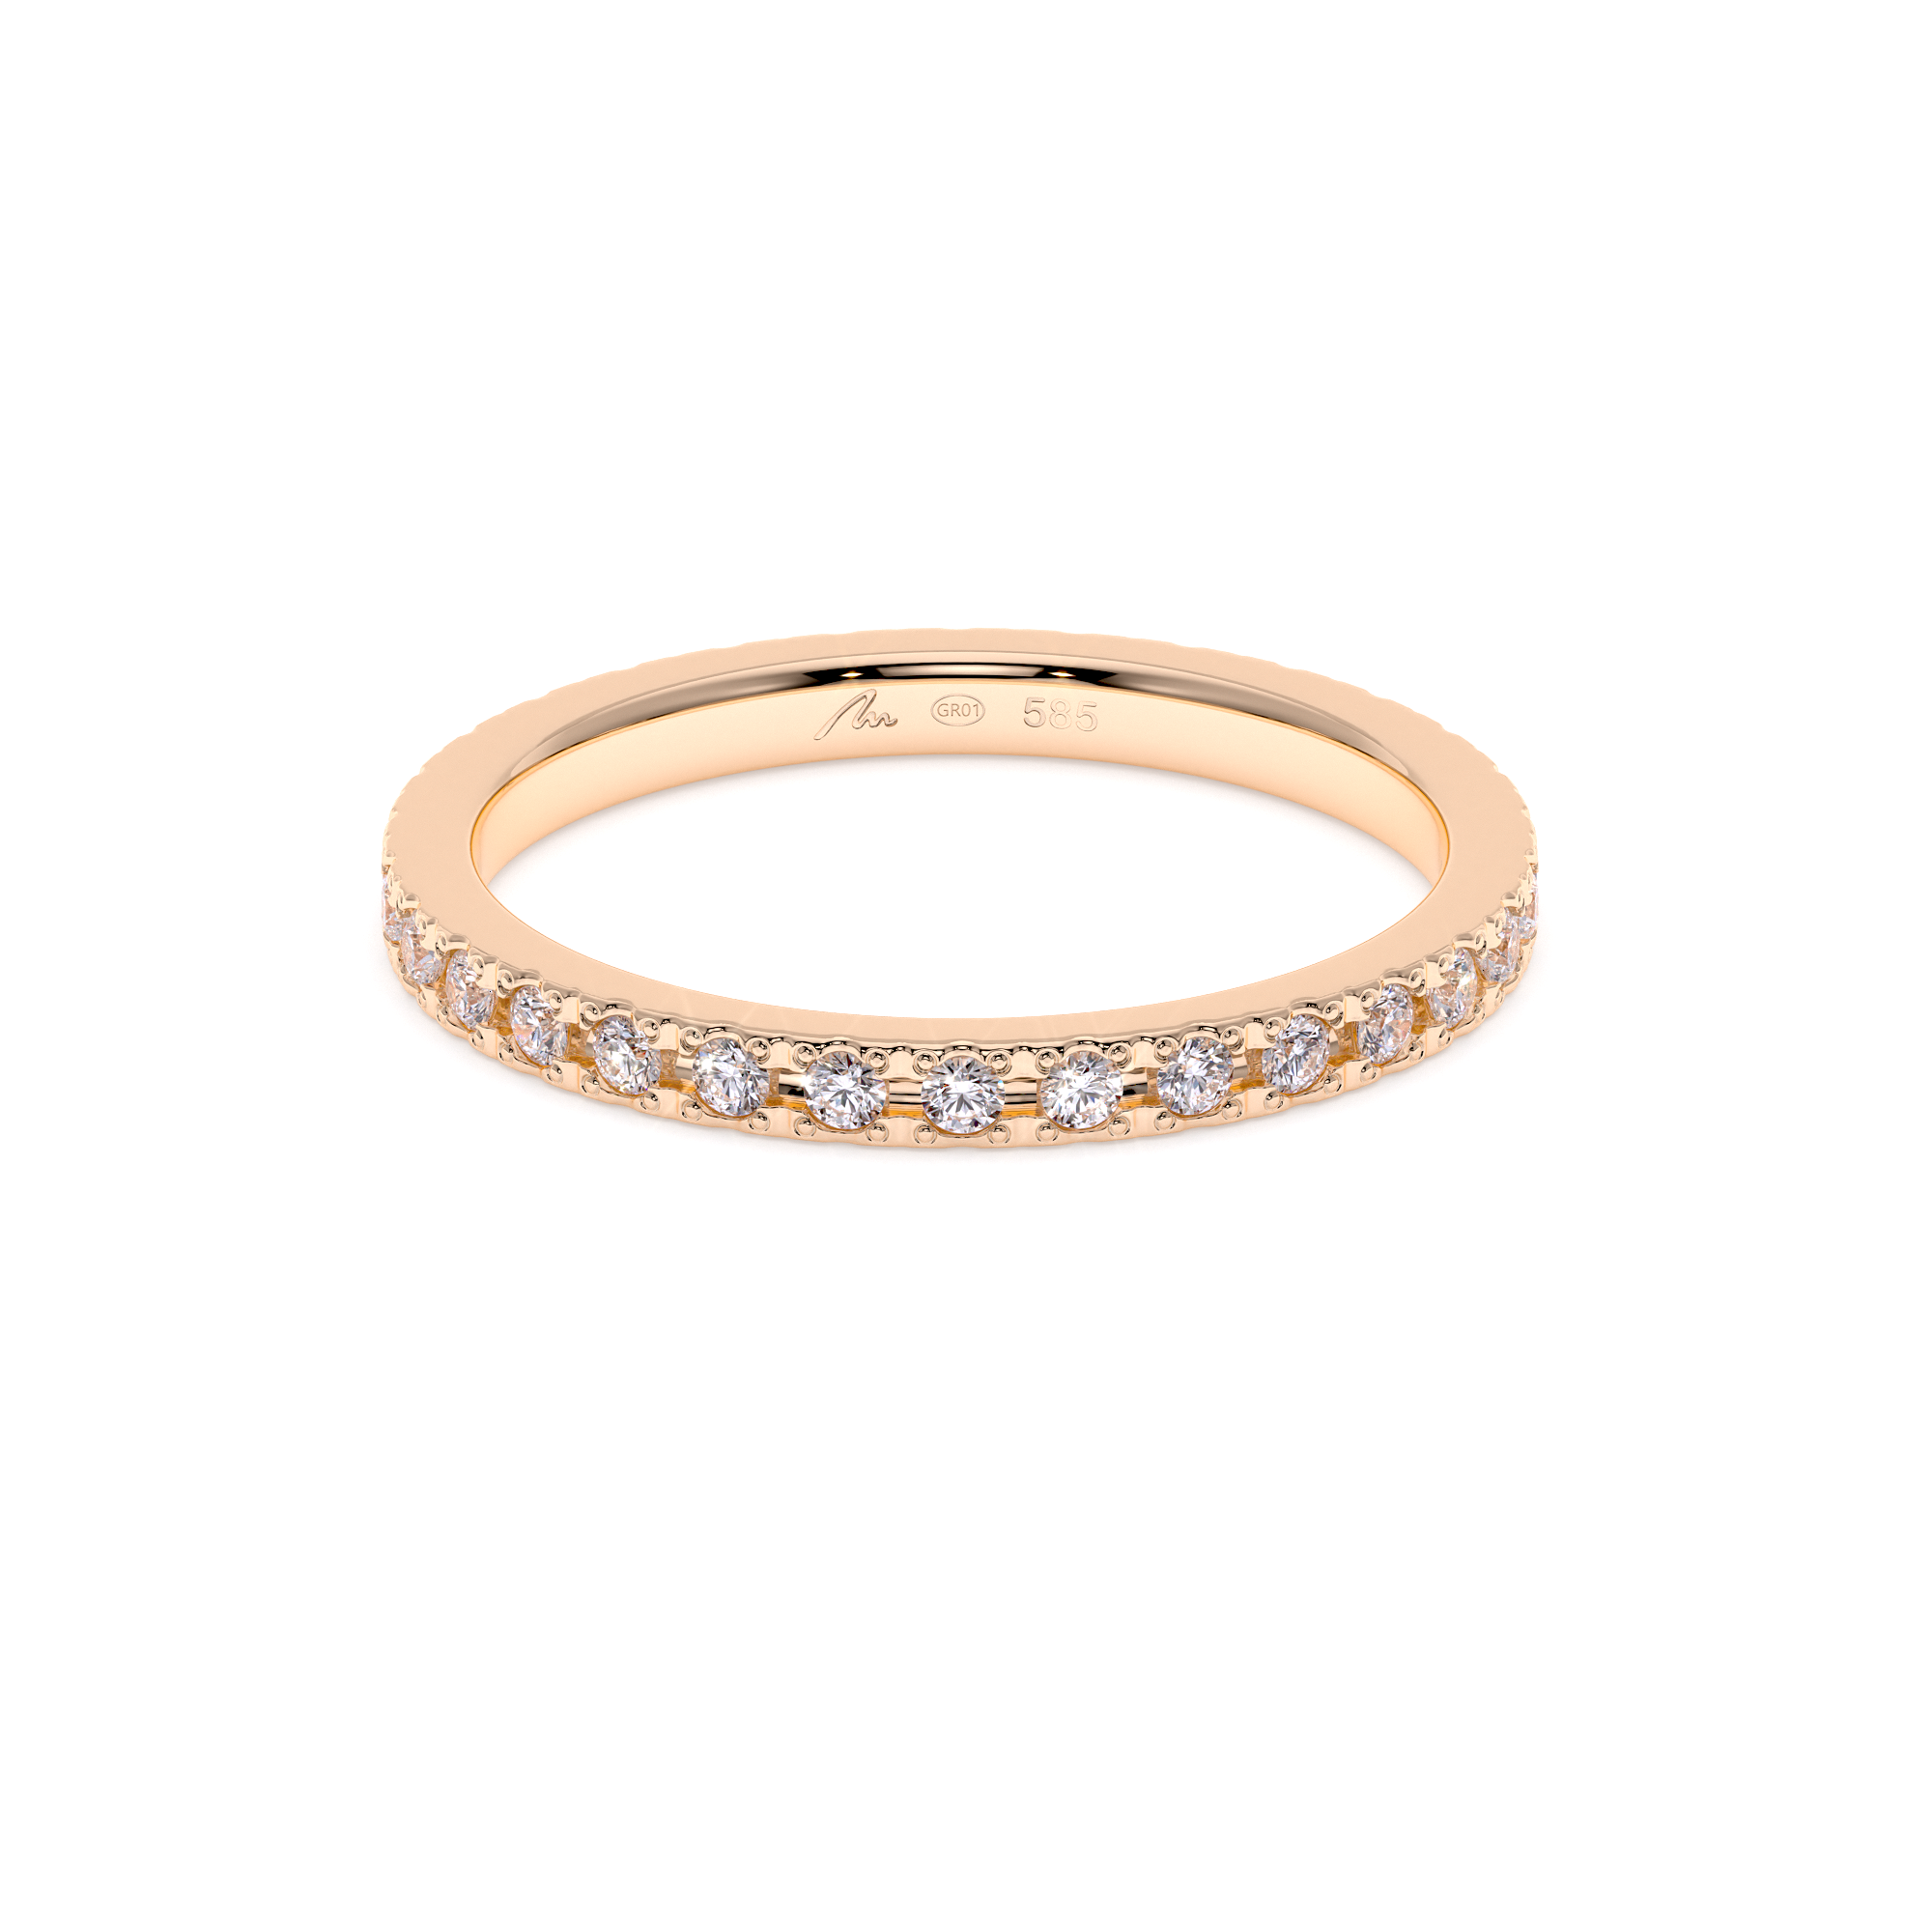 14 k rose gold Tennis ring with 0.45 CT white diamonds